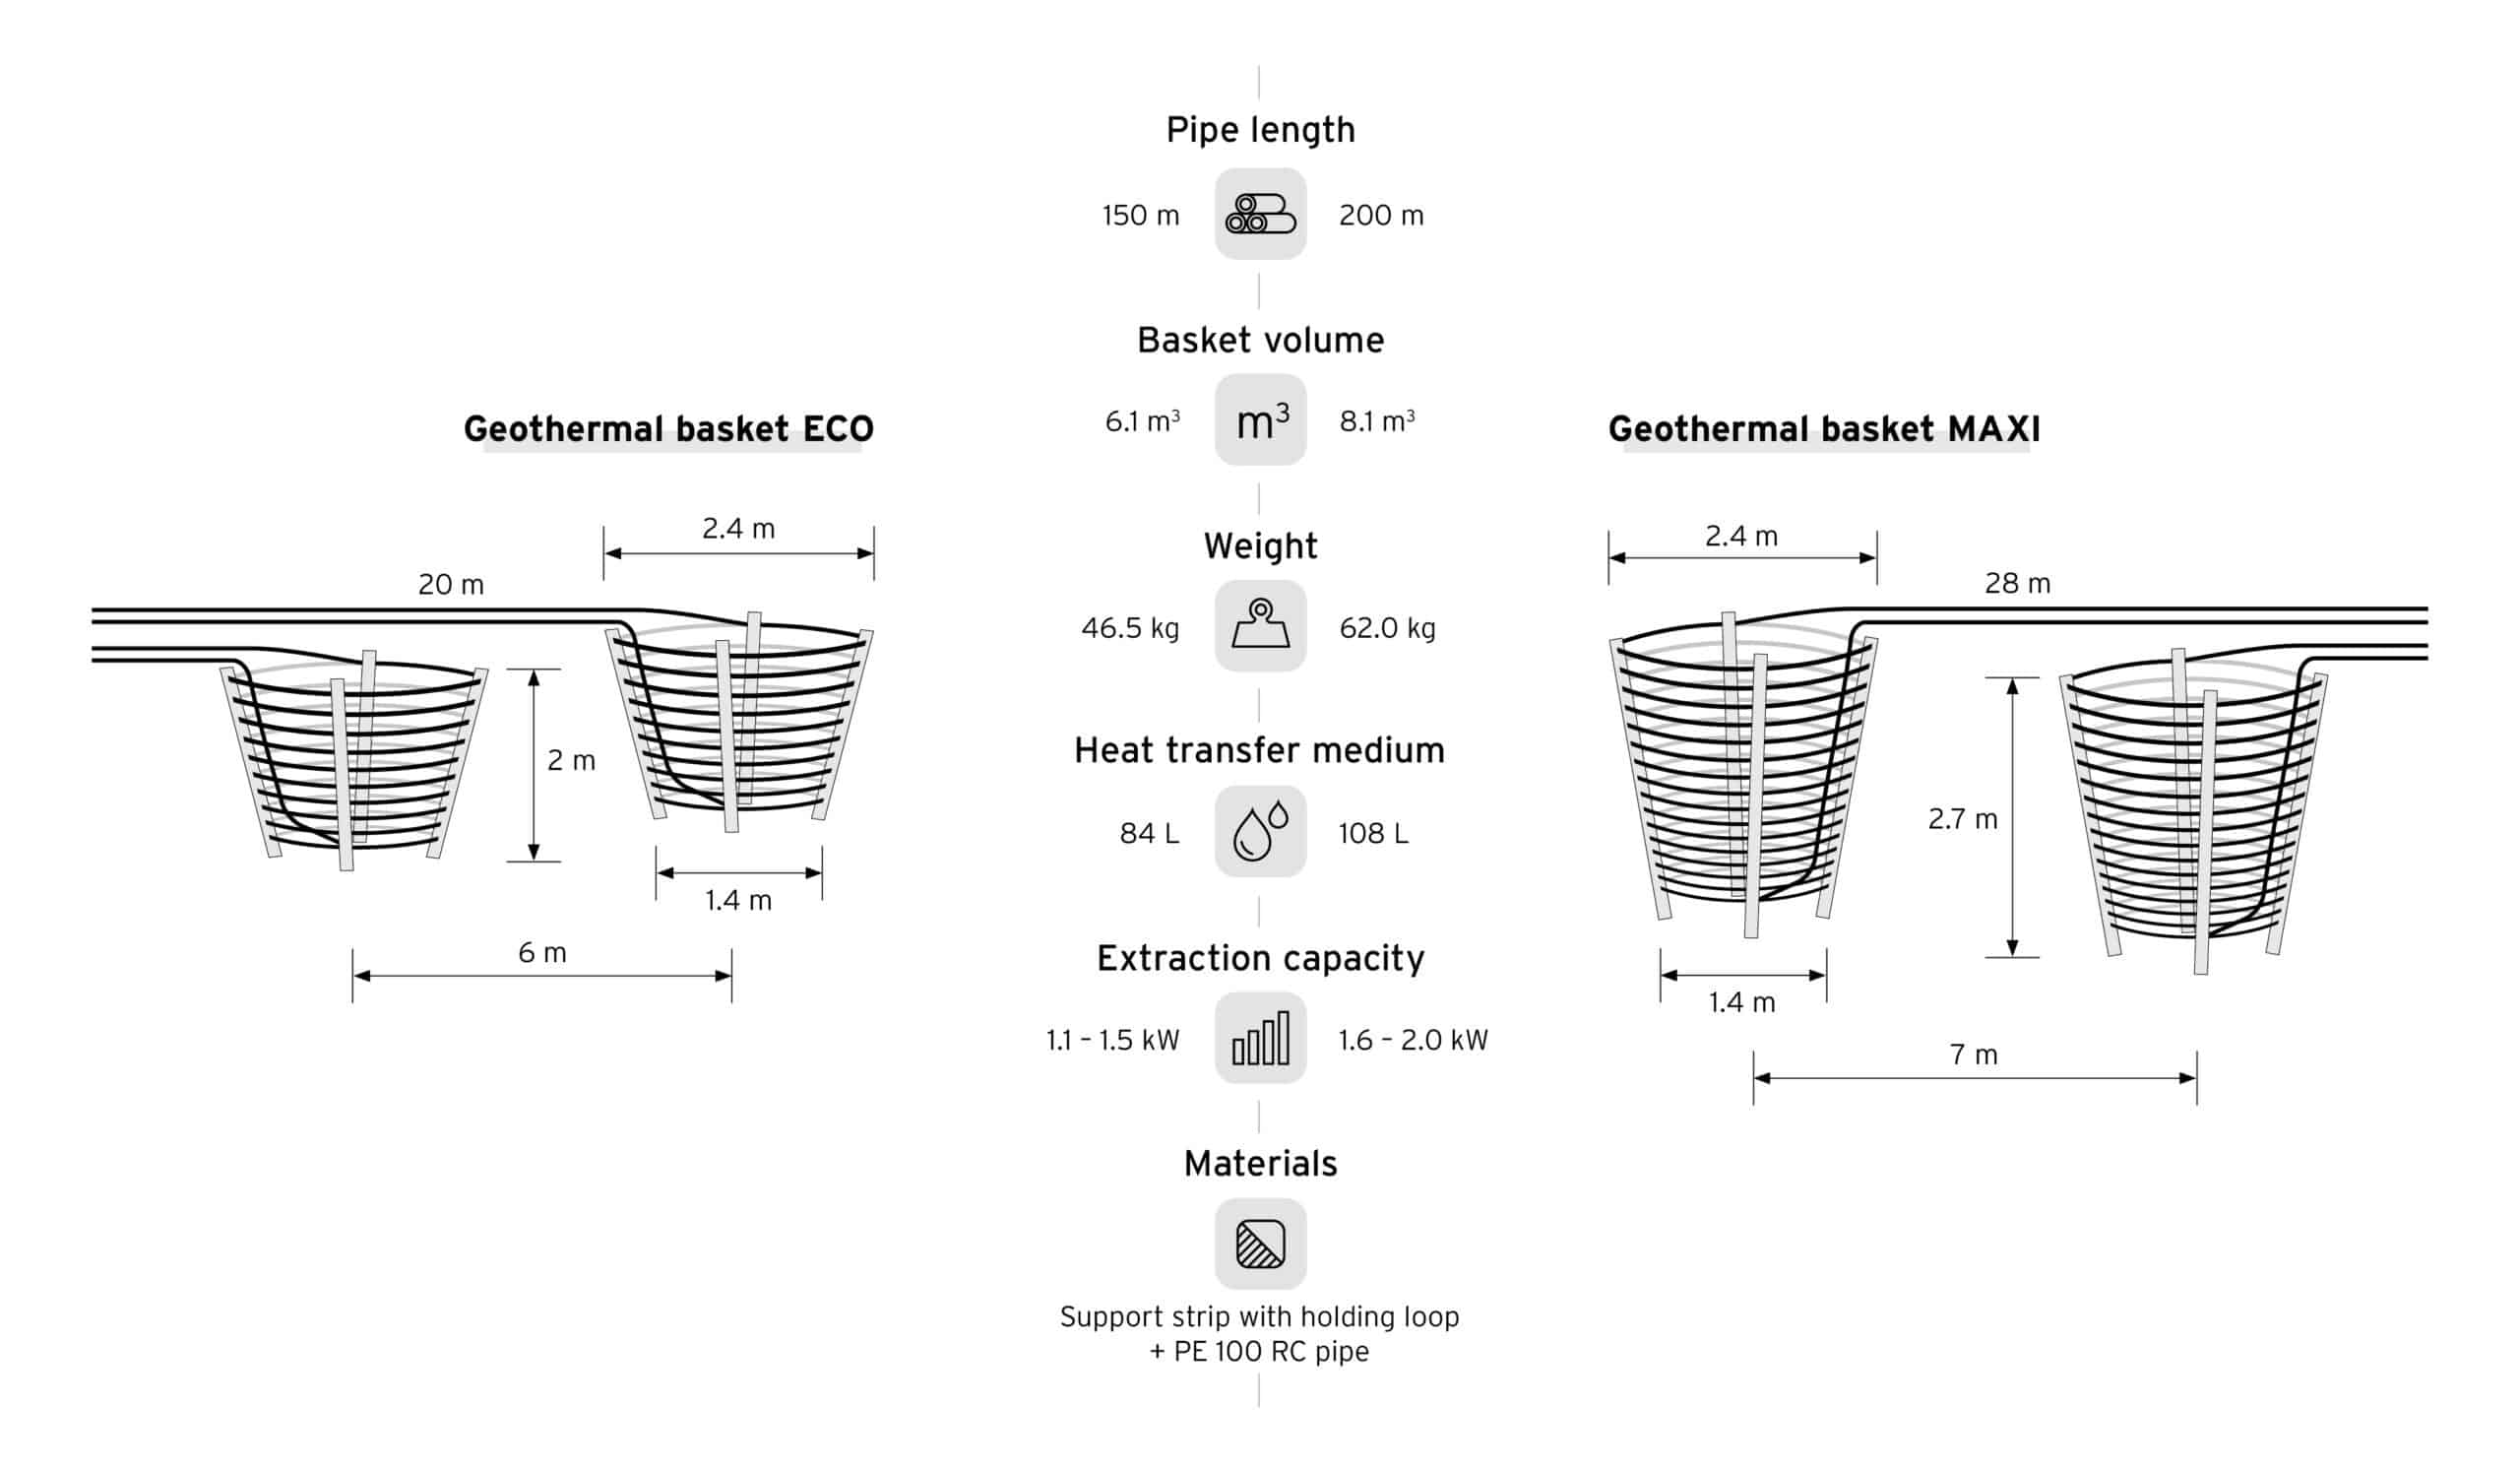 Geothermal basket Technical Data